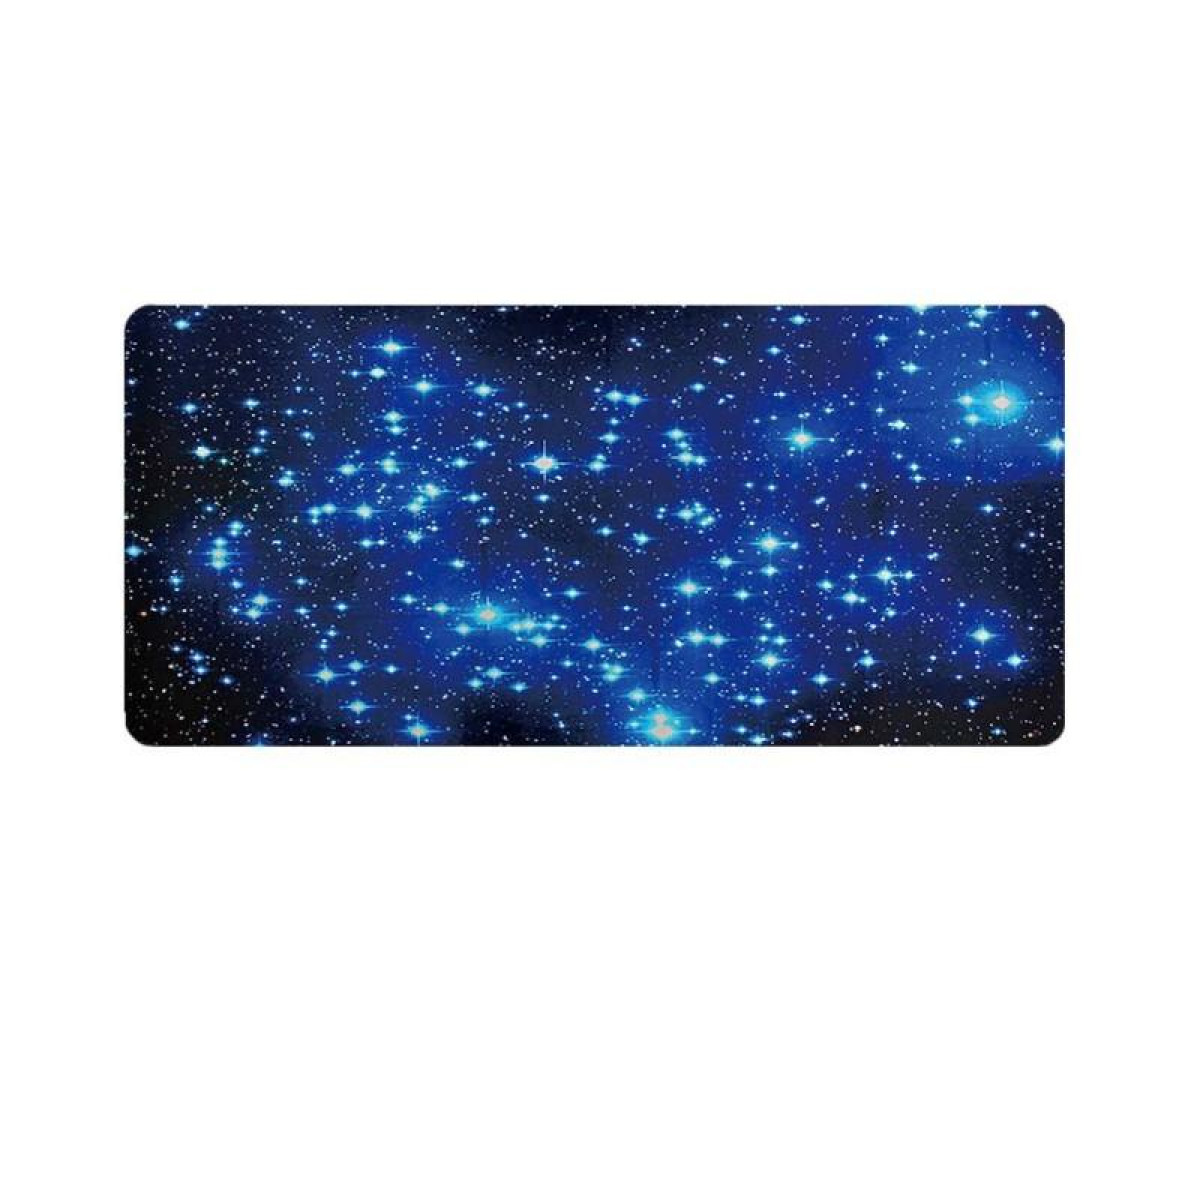 INF Großes Mauspad mit Sternenhimmelmuster cm cm) Schwarz/Blau 30x80 cm x 80 (0,2 Mauspad